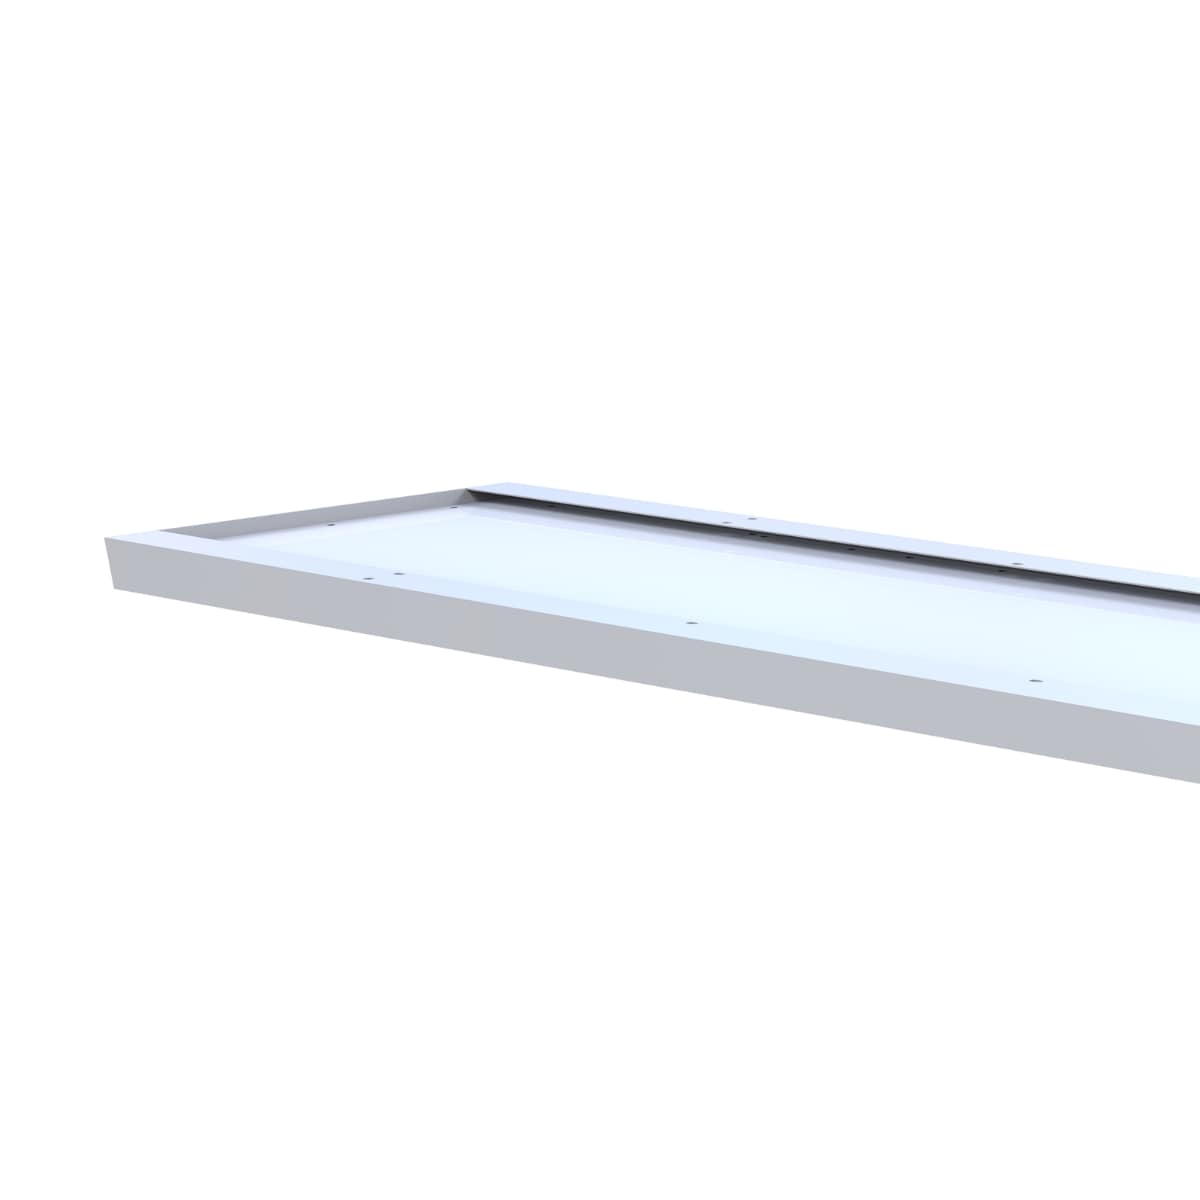 LED-Panel MULTI - Aufputzrahmen weiß 1245 x 618 x 5 mm flach